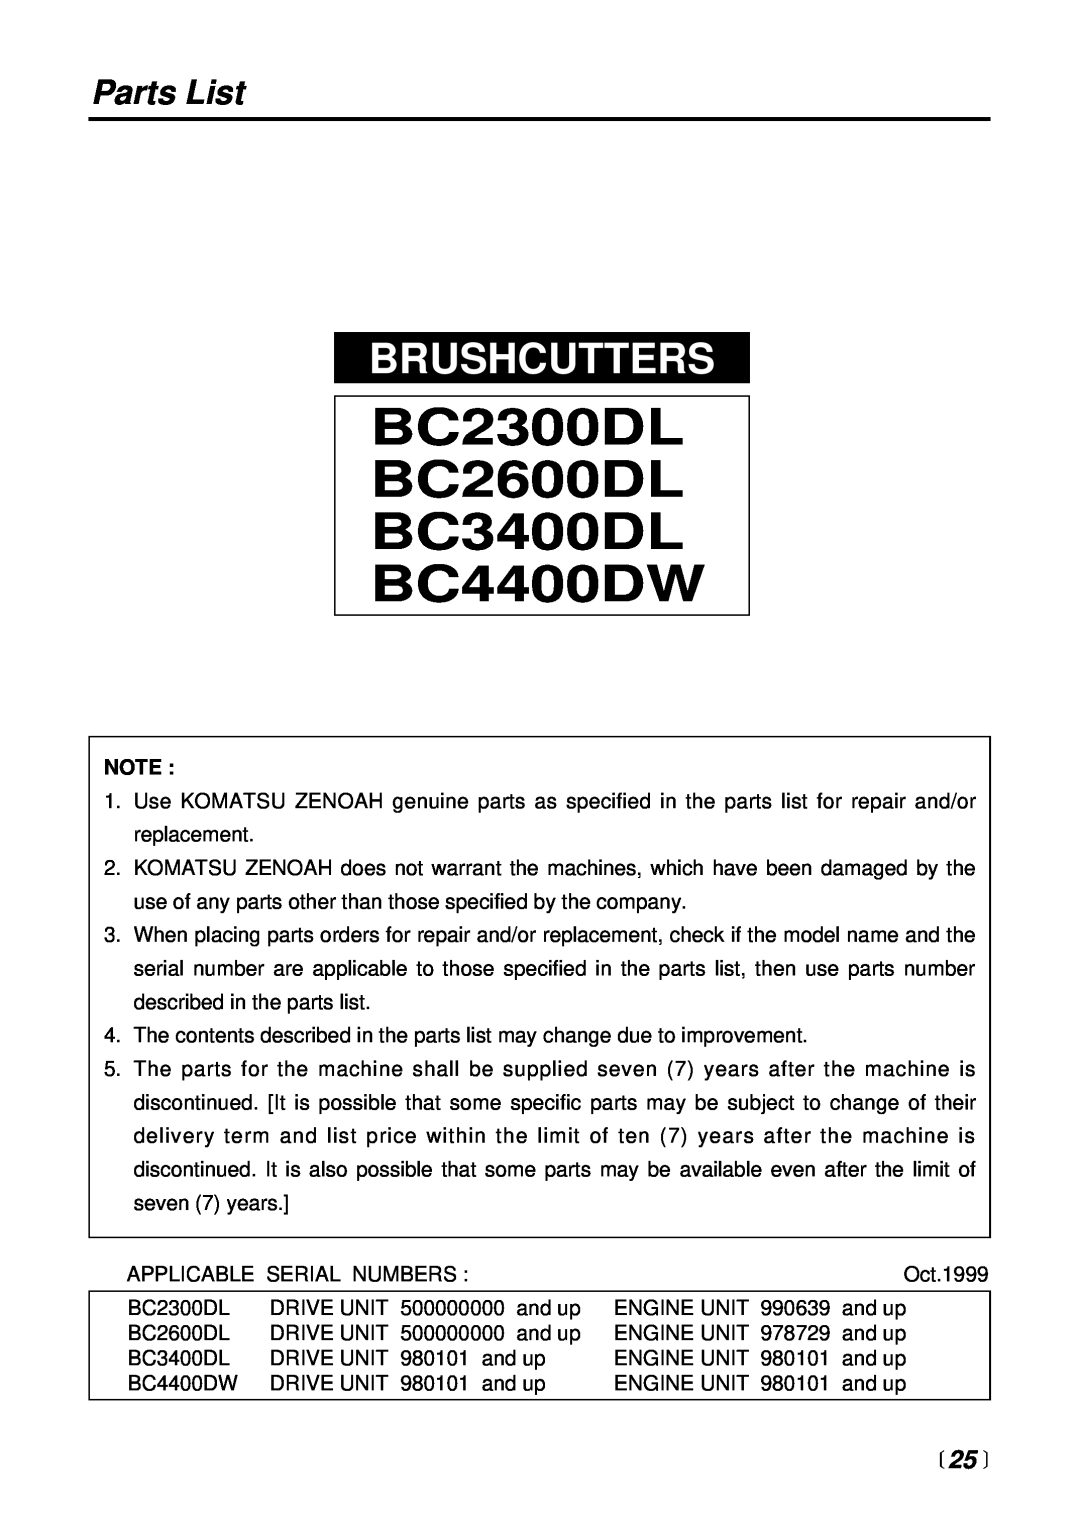 RedMax manual Parts List, 25 , BC2300DL BC2600DL BC3400DL BC4400DW, Brushcutters 